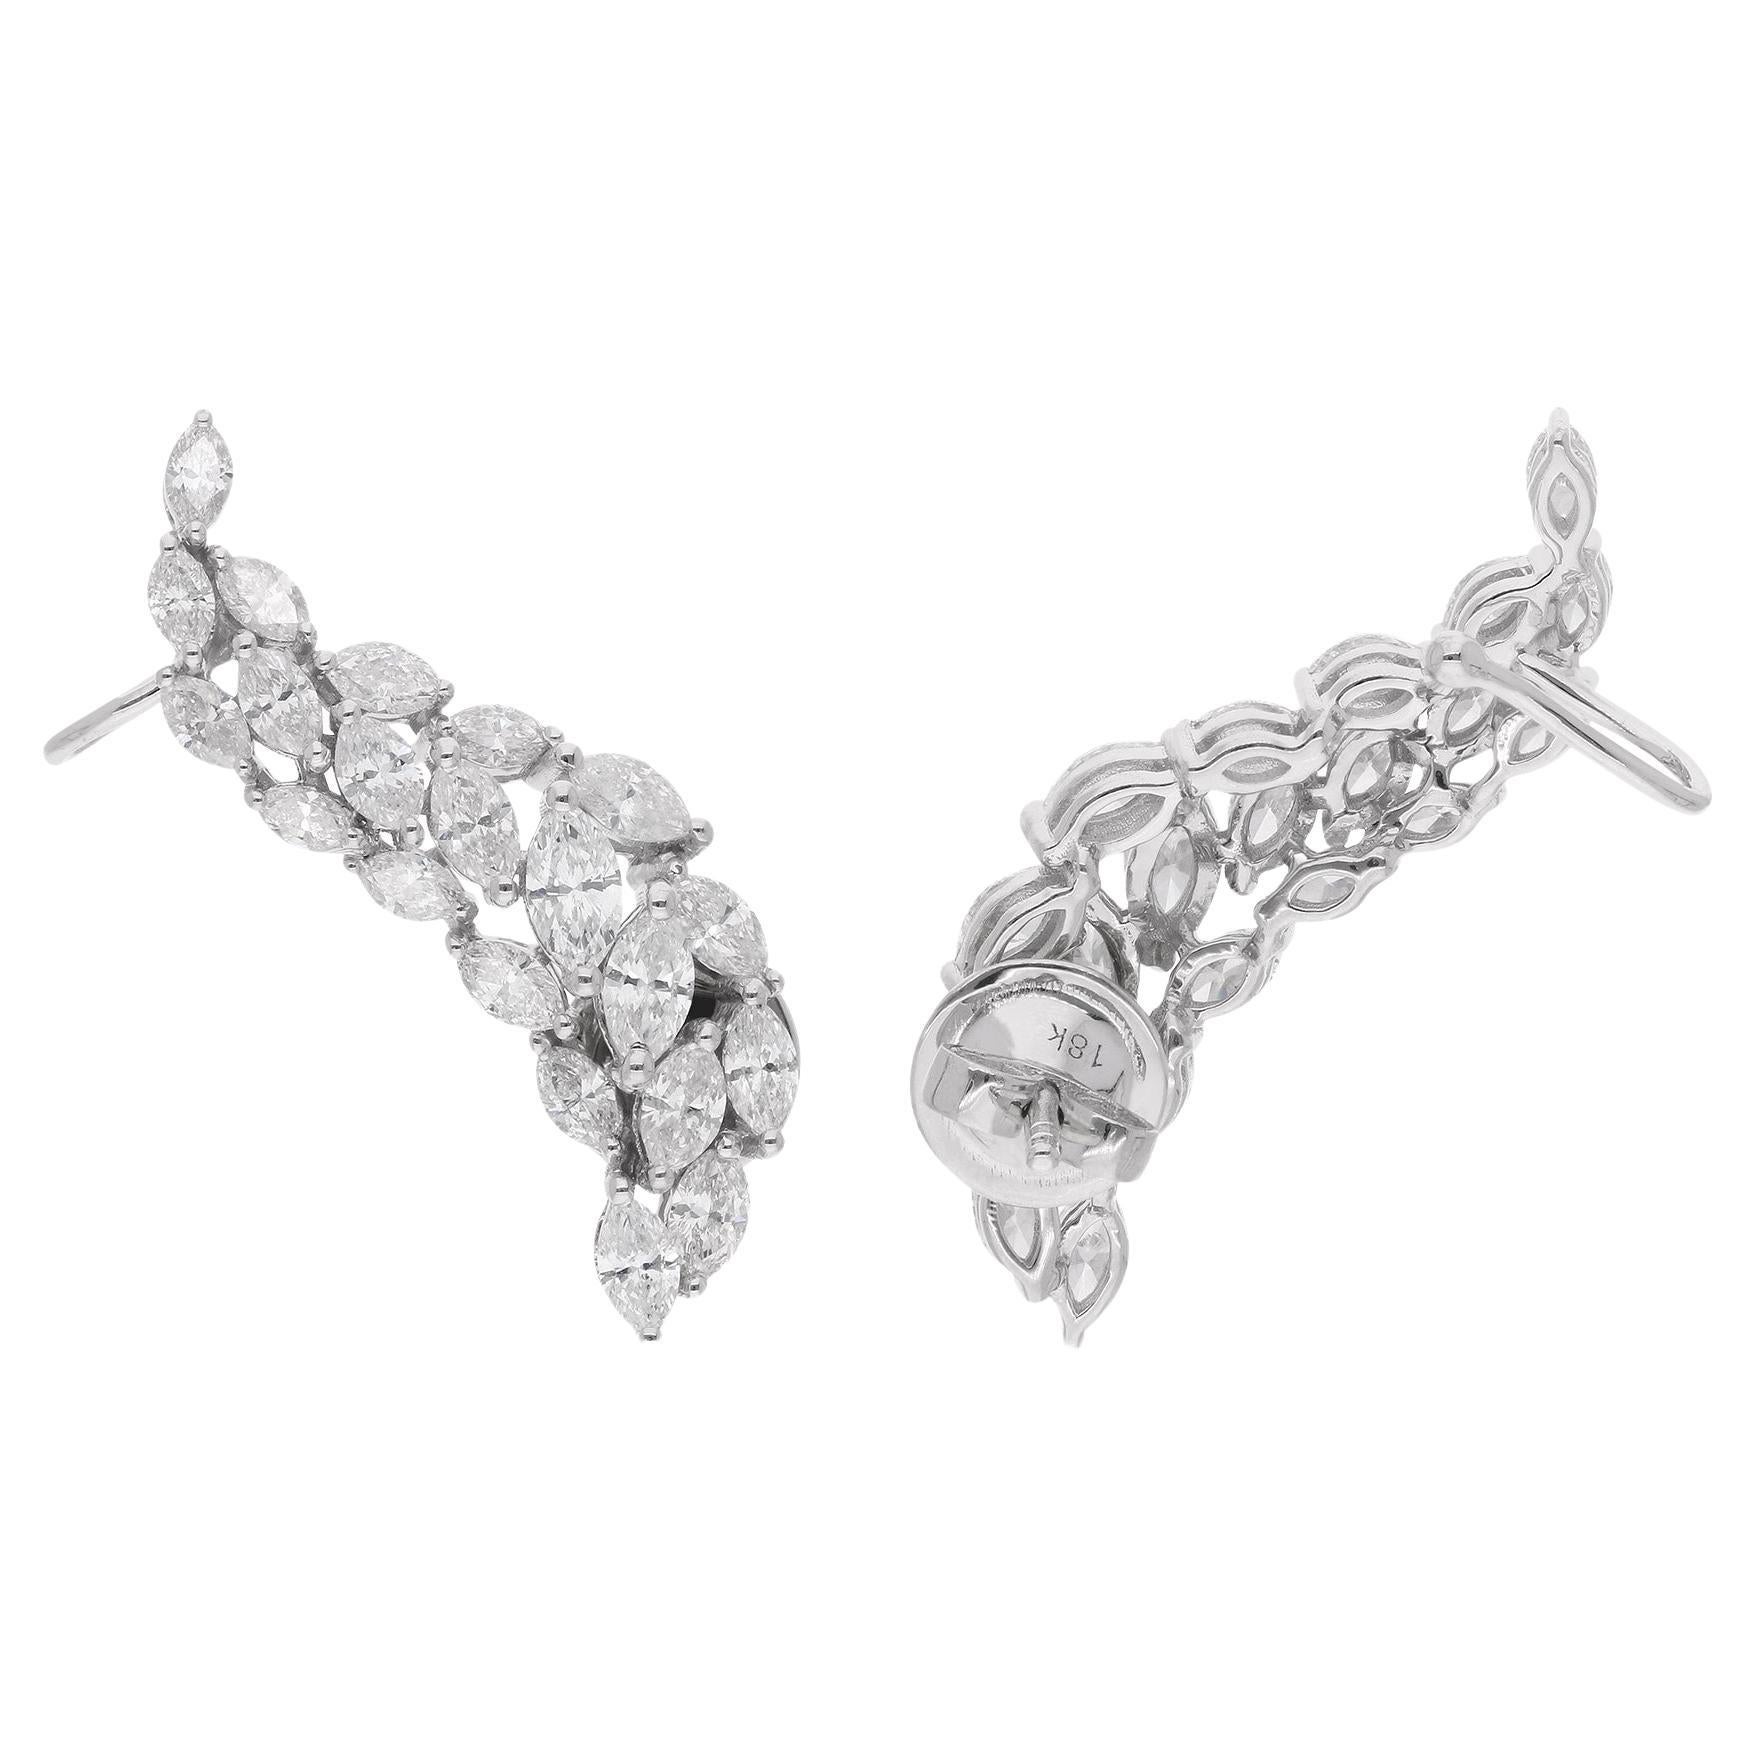 Real 2.91 Carat Marquise Diamond Ear Cuff Earrings 14 Karat White Gold Jewelry